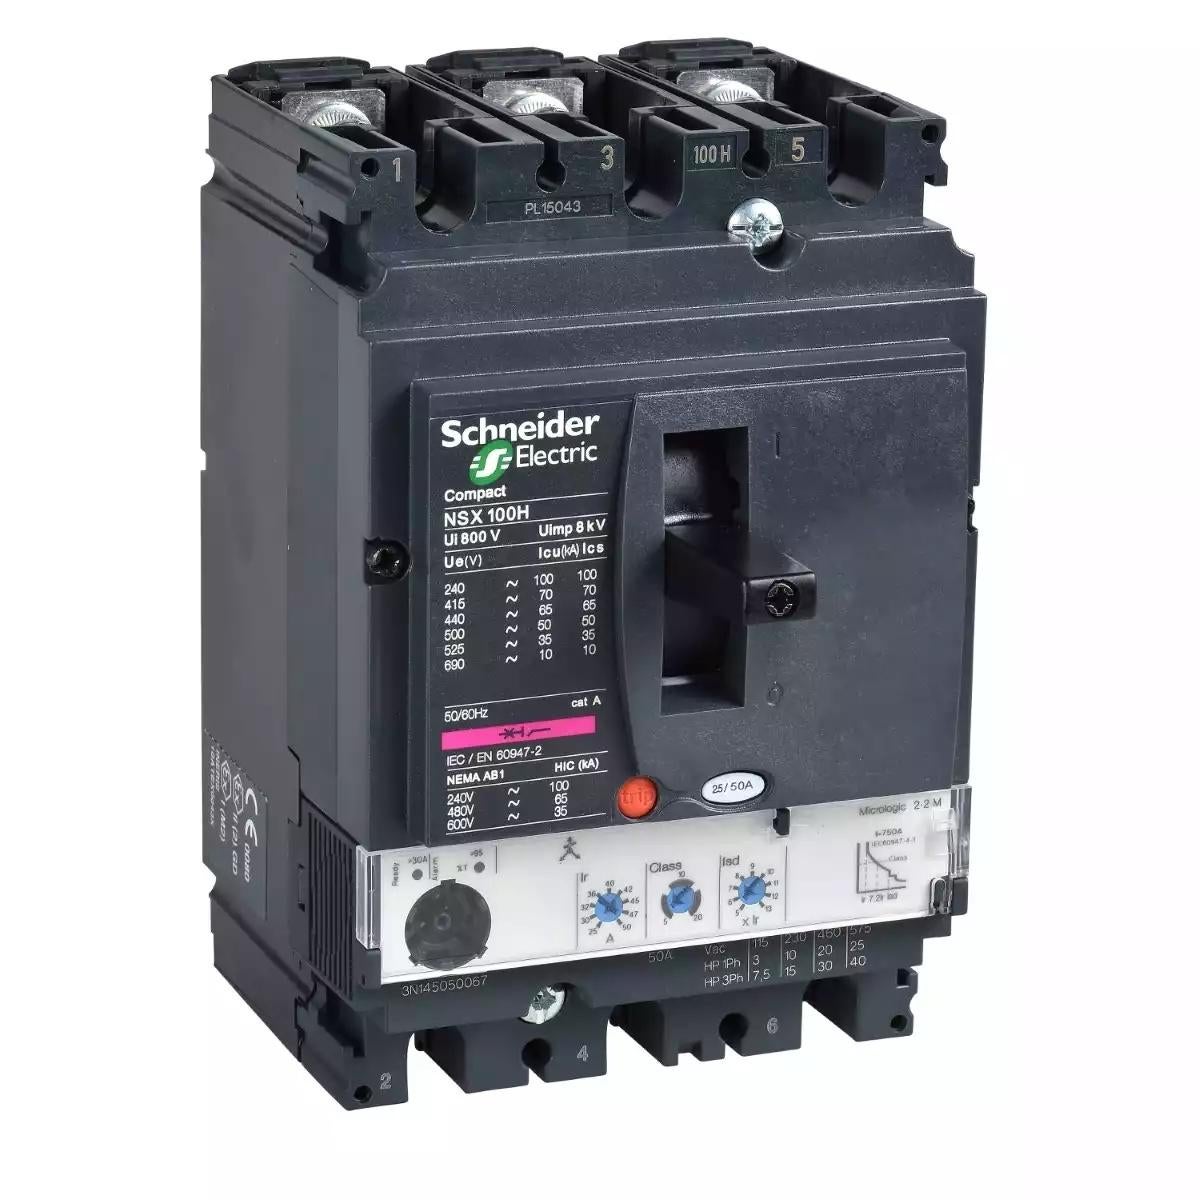 Schneider Electric Compact NSX <630 circuit breaker NSX160H - Micrologic 2.2 - 160 A - 3 poles 3d